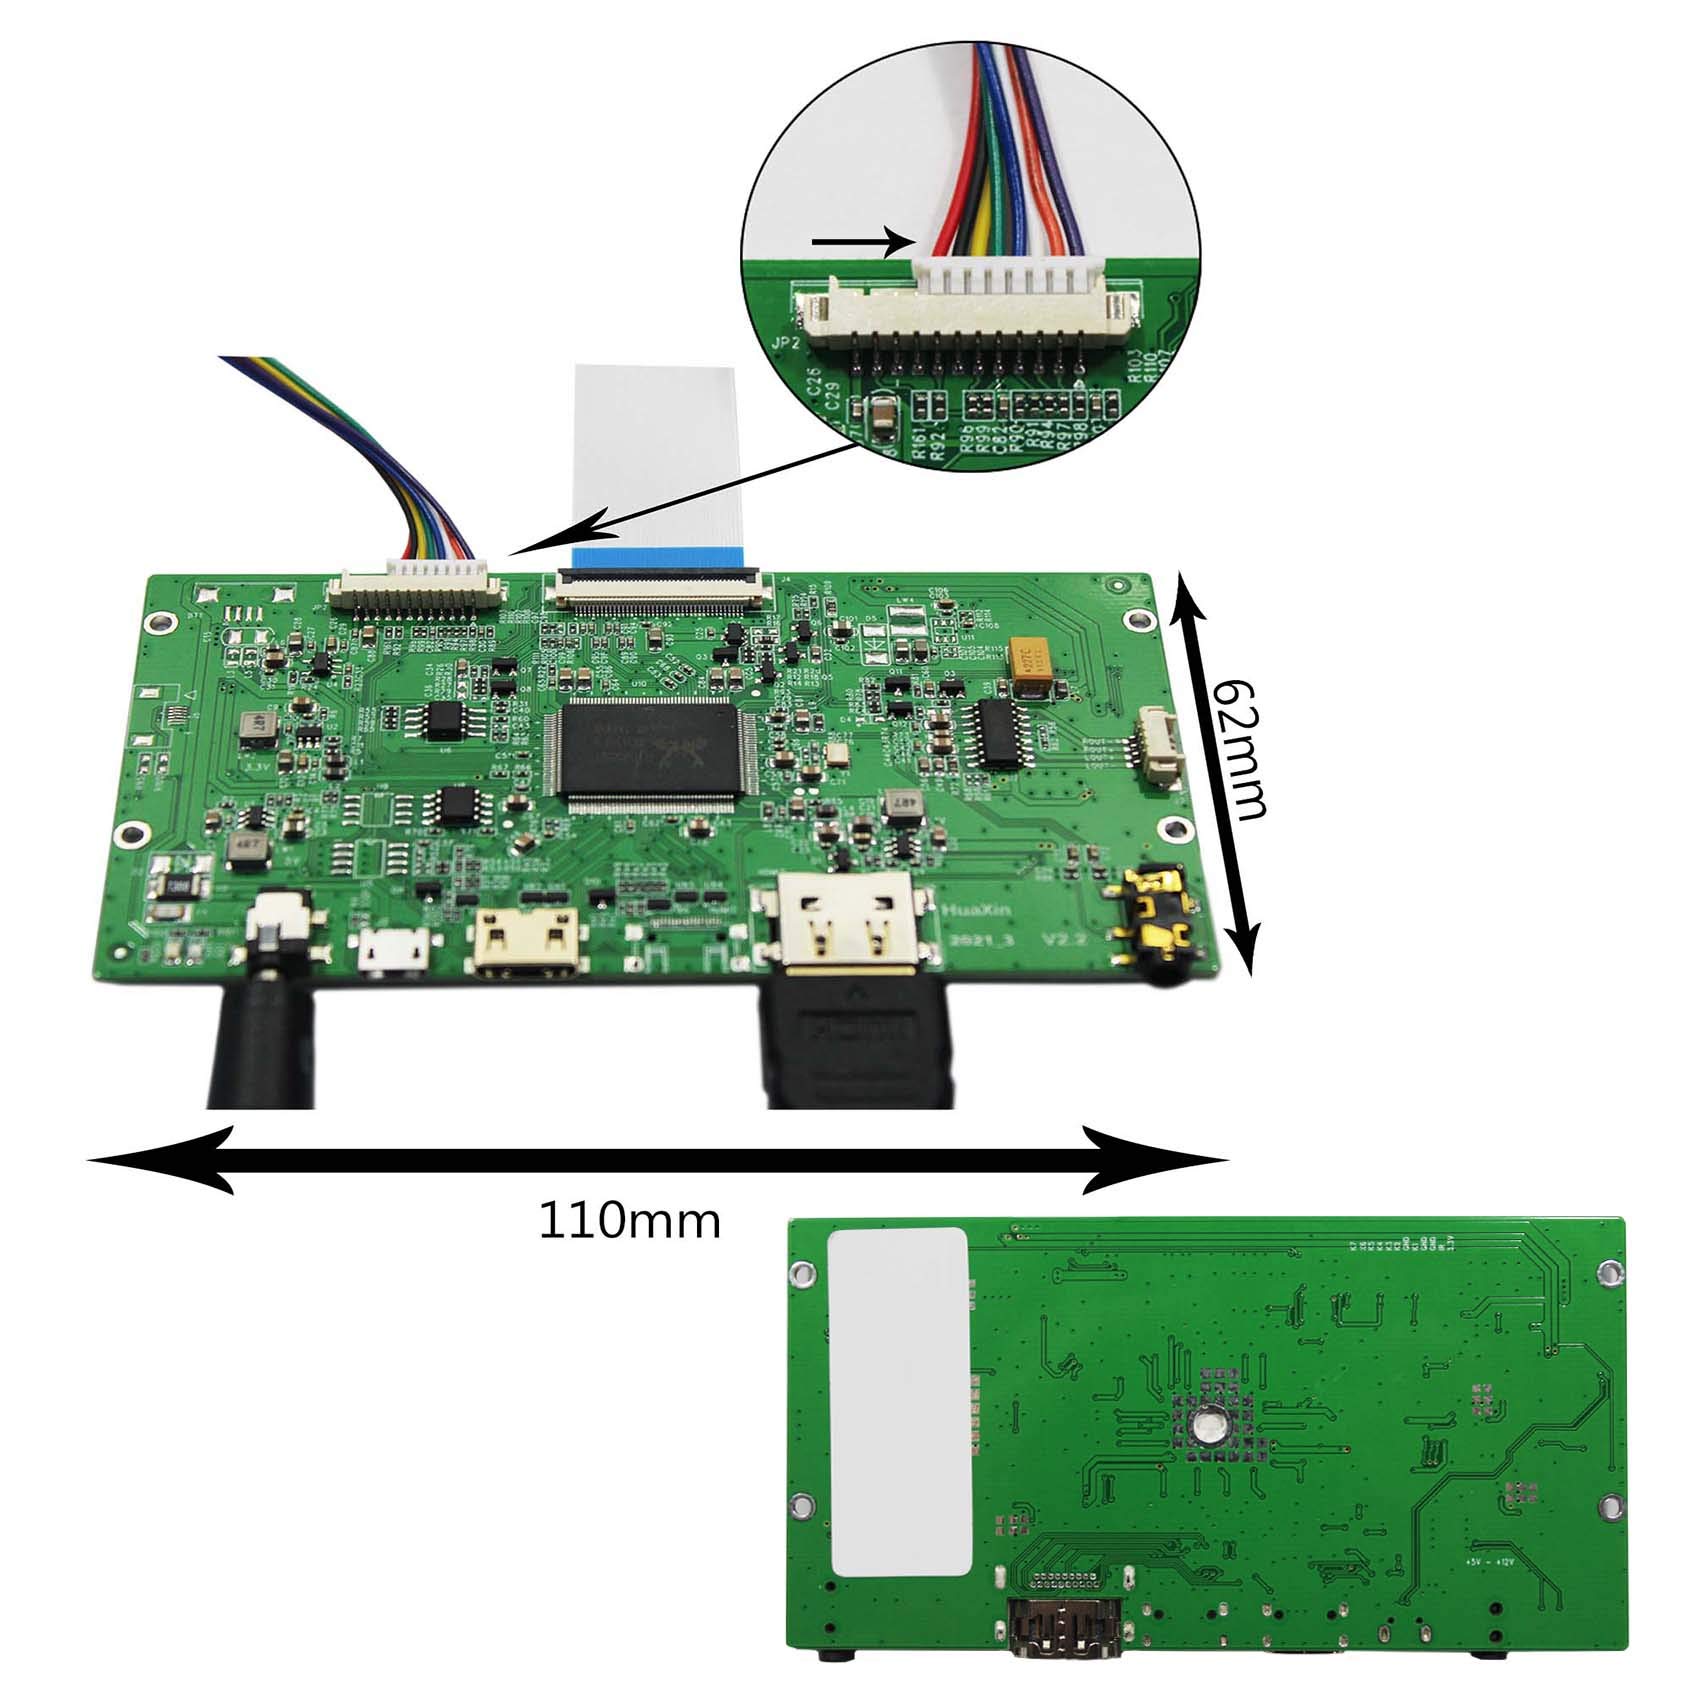 VSDISPLAY 9.7 inch 2048x1536 IPS LCD LP097QX1/ LTL097QL01/ HQ097QX1 with HD-MI Controller Board fit for DIY Cabinet Monitor